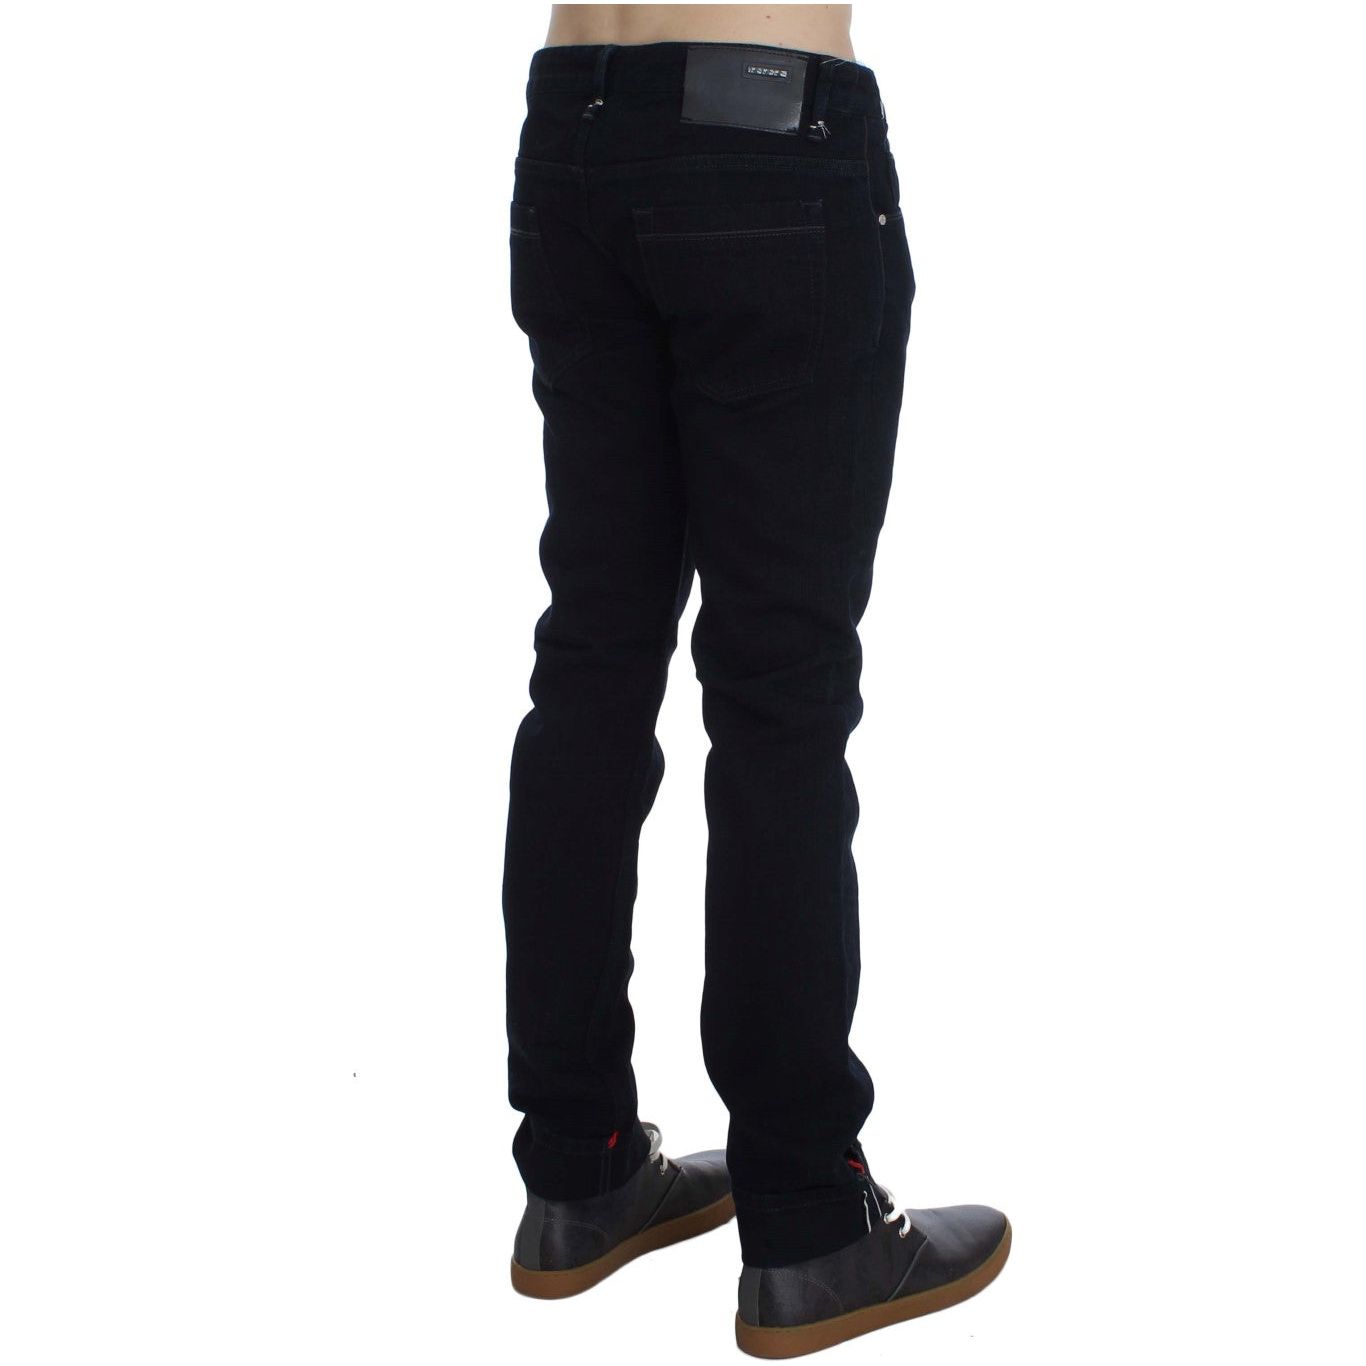 Acht Exquisite Slim Skinny Fit Men's Jeans dark-blue-corduroy-slim-skinny-fit-jeans 298973-dark-blue-corduroy-slim-skinny-fit-jeans.jpg